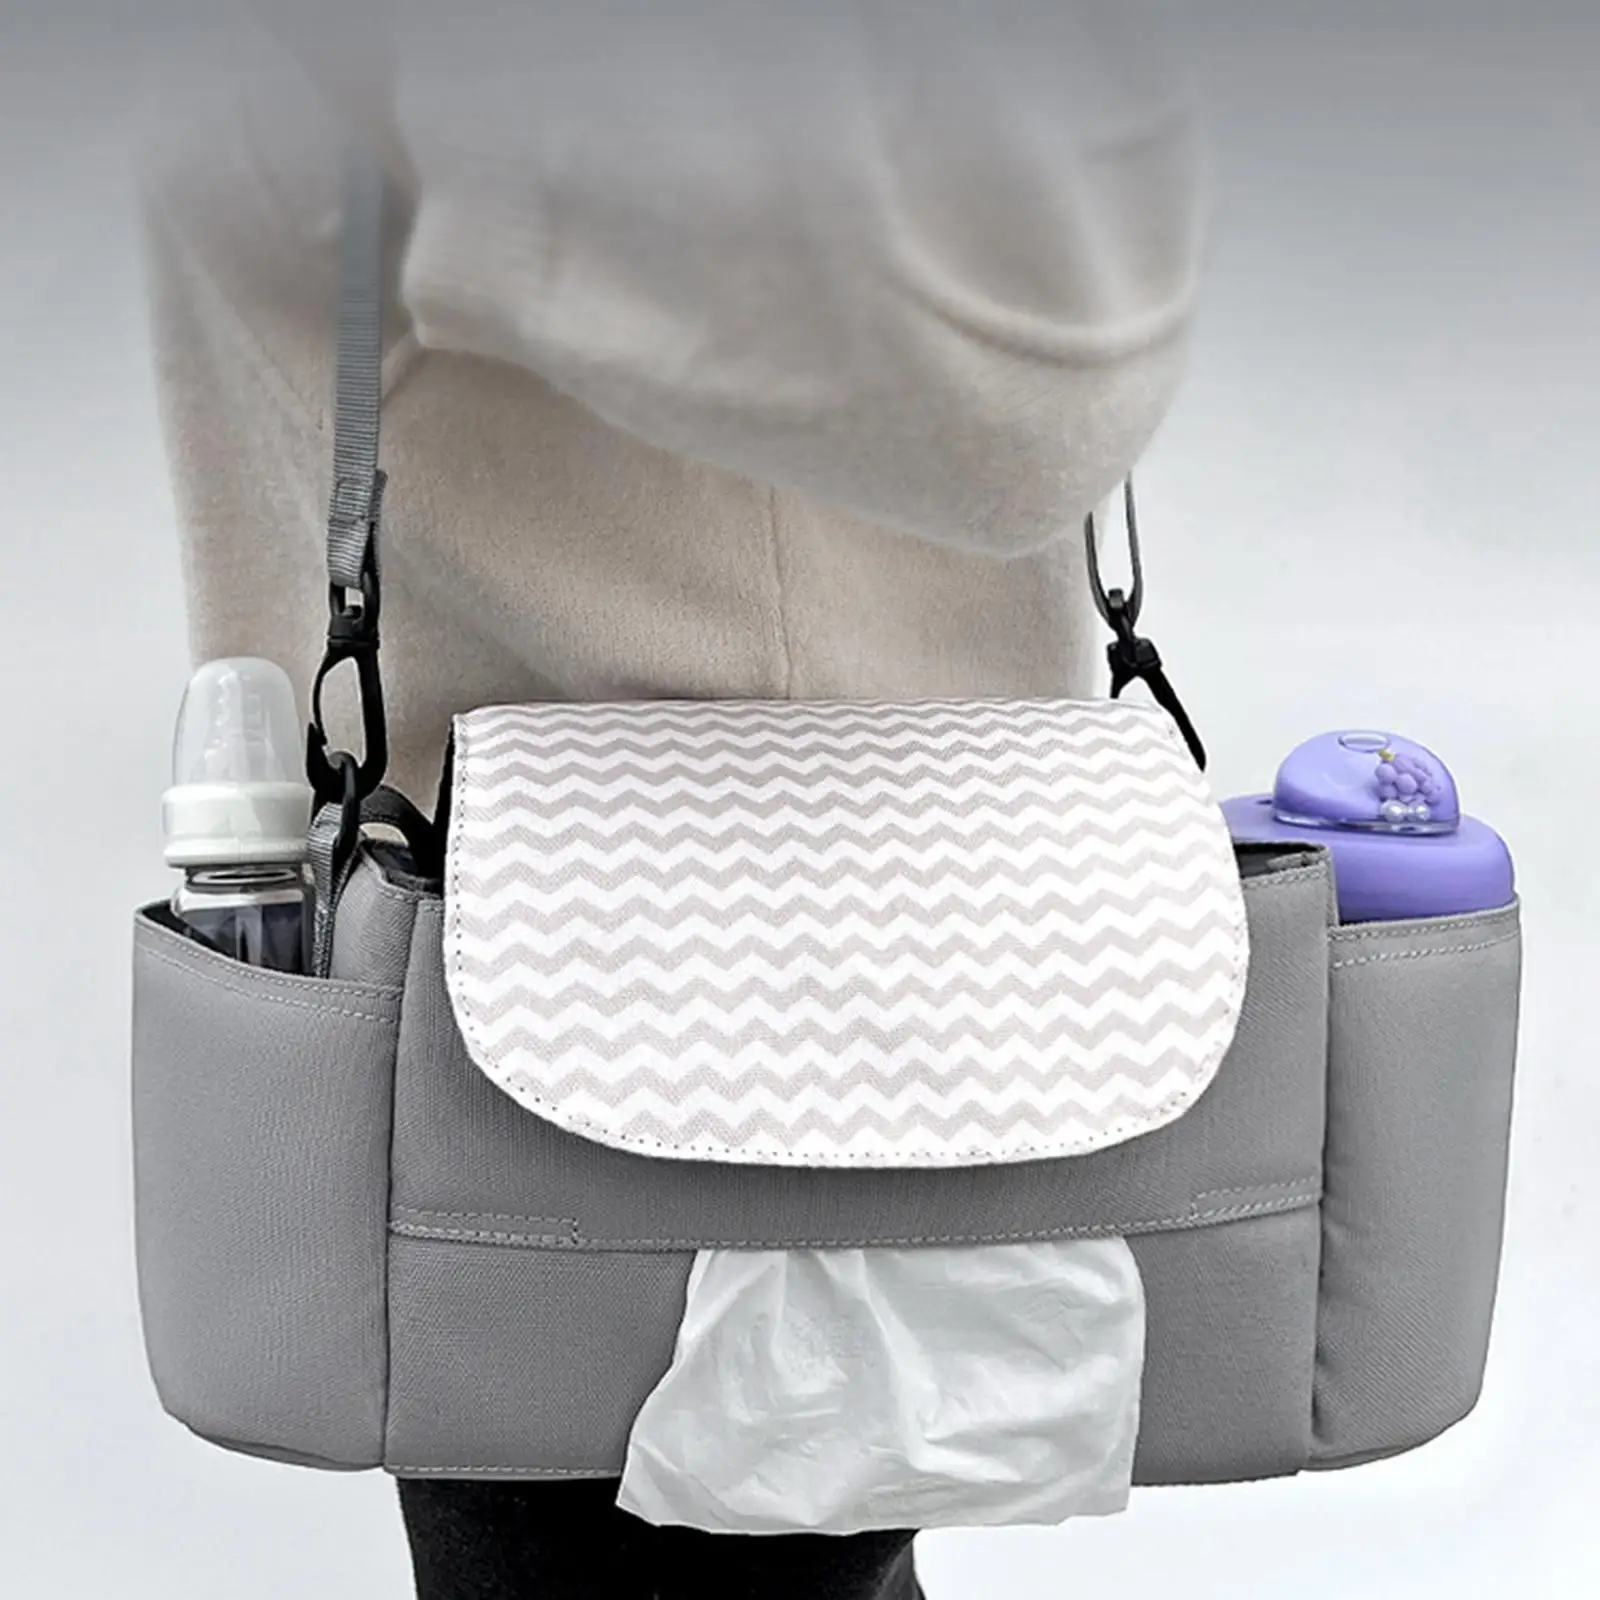 Hanging Stroller Organizer Bag with Cup Holder Stroller Caddy Large Capacity Waterproof Multipurpose Univesal for Stroller Pram